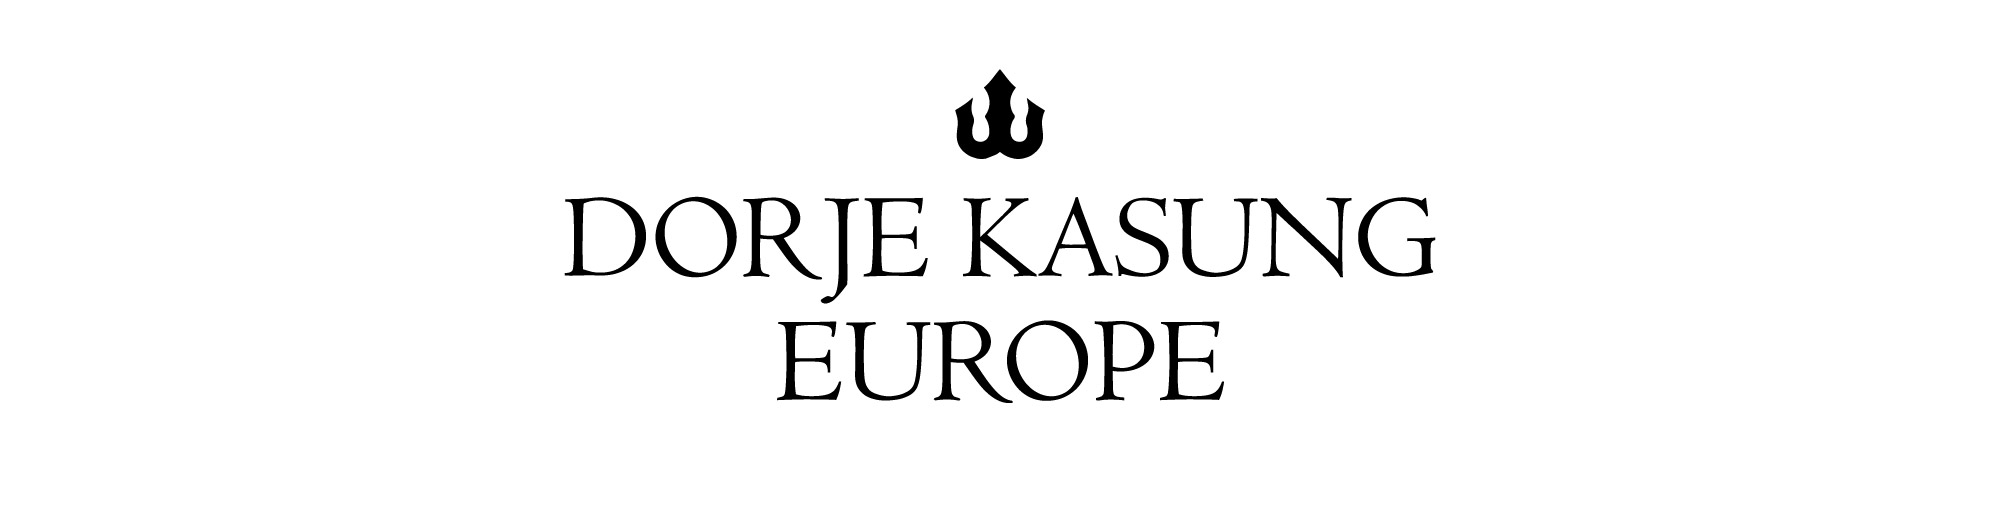 Dorje Kasung Europe